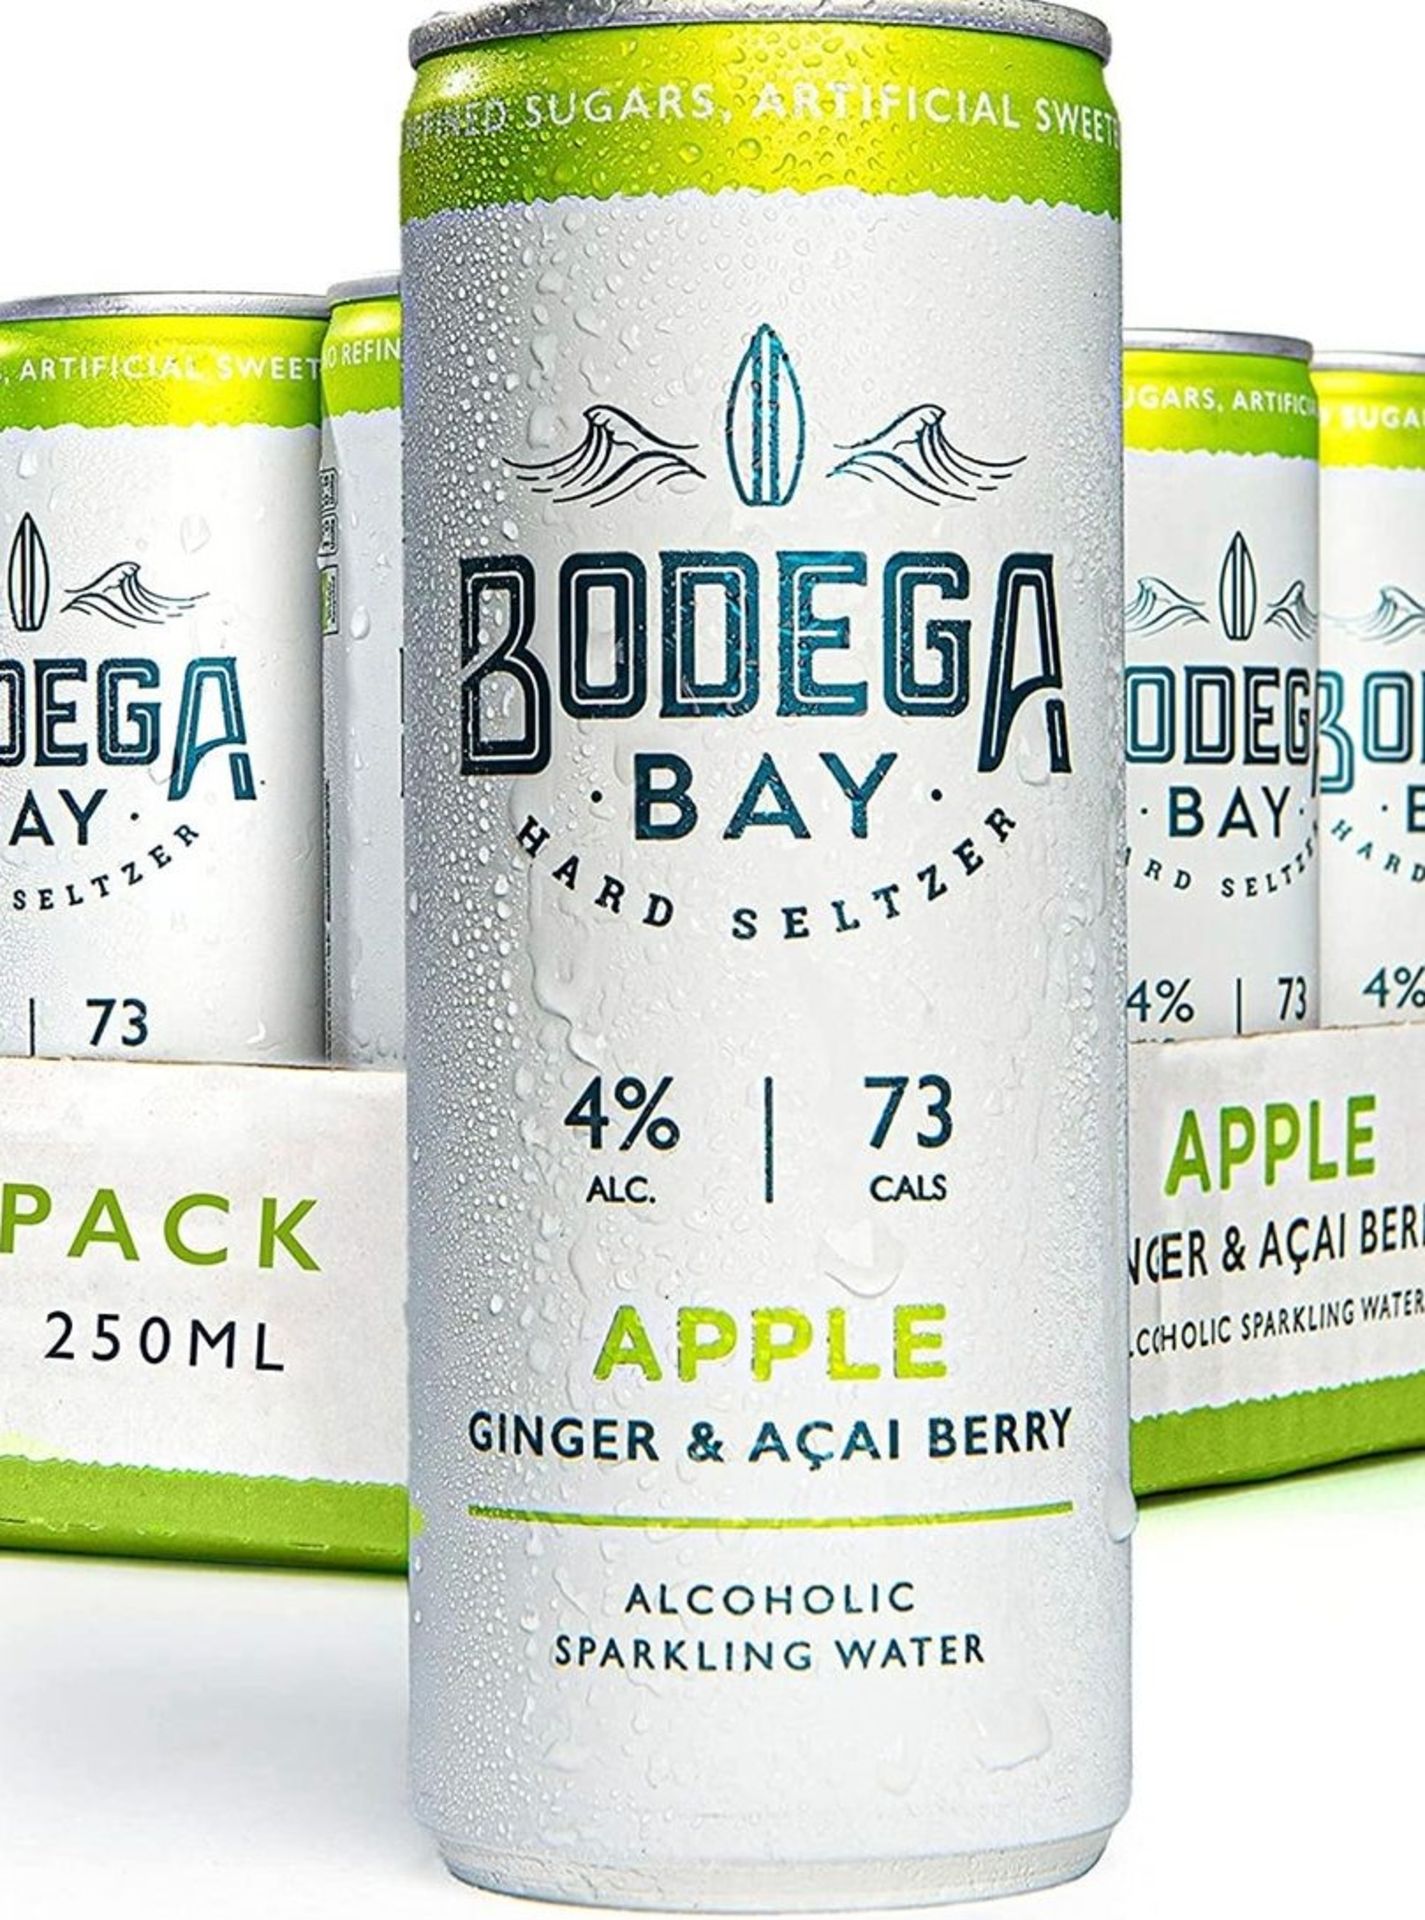 24 x Bodega Bay Hard Seltzer 250ml Alcoholic Sparkling Water Drinks - Apple Ginger & Acai Berry - 4% - Image 9 of 9